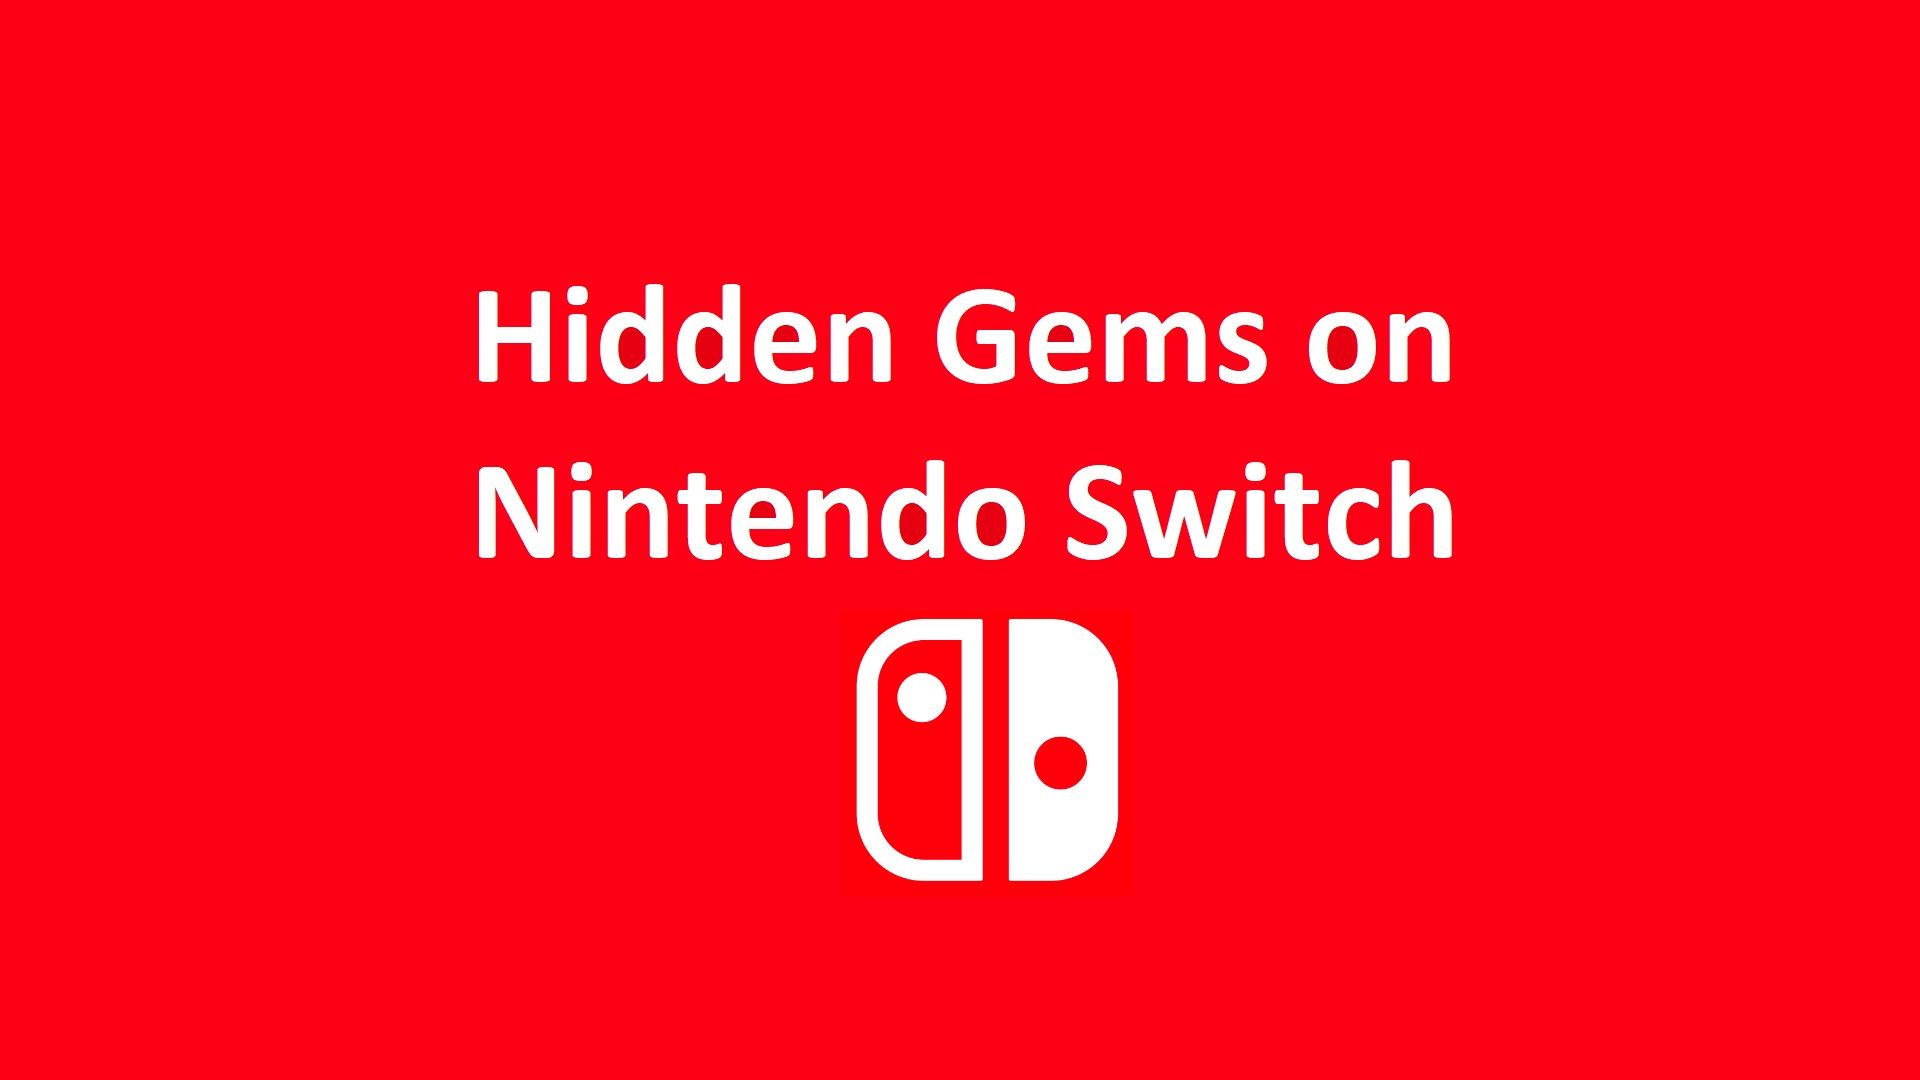 21 Hidden Gems on Nintendo Switch (December 2019)